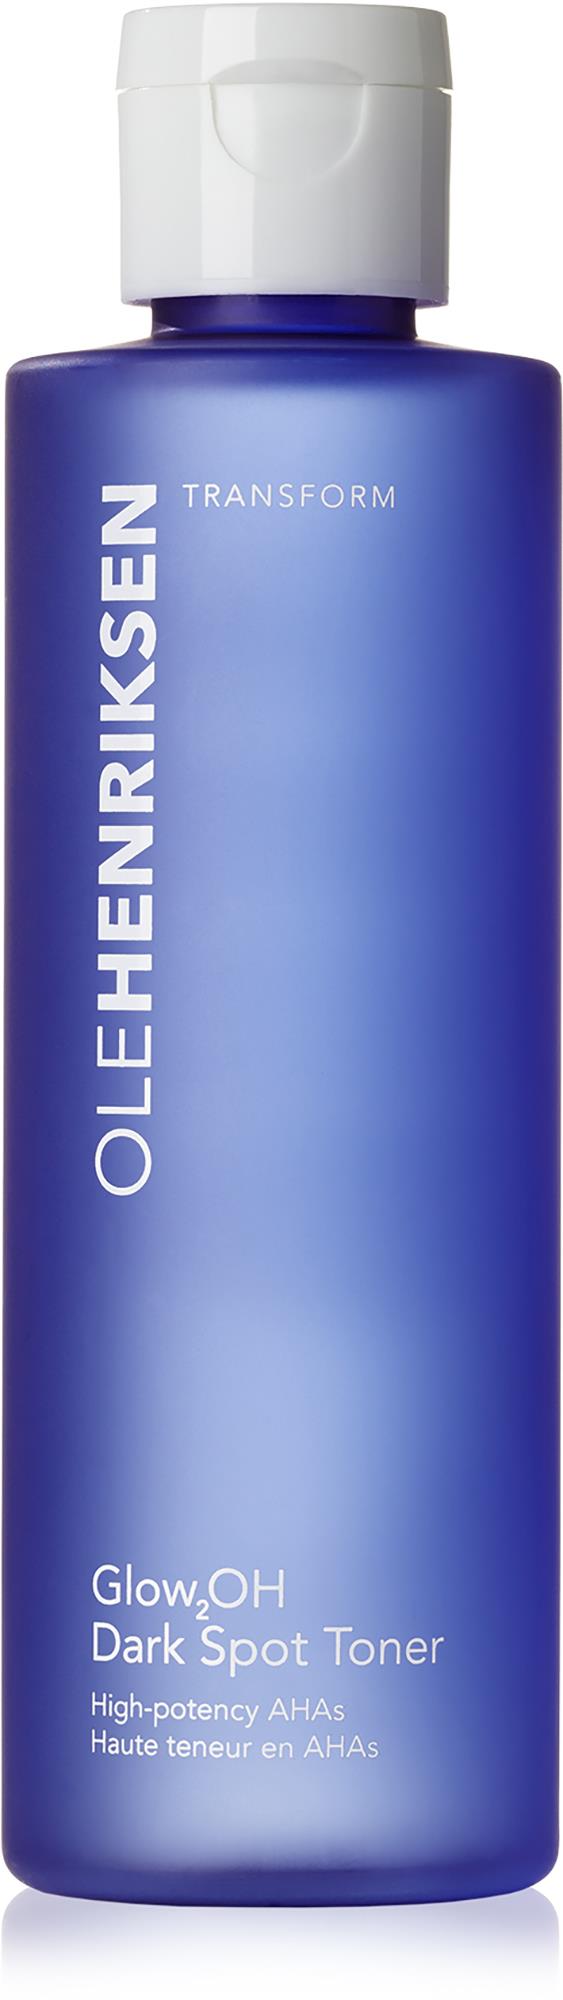 Ole Henriksen Dark Spot Toner 190 ml | lyko.com